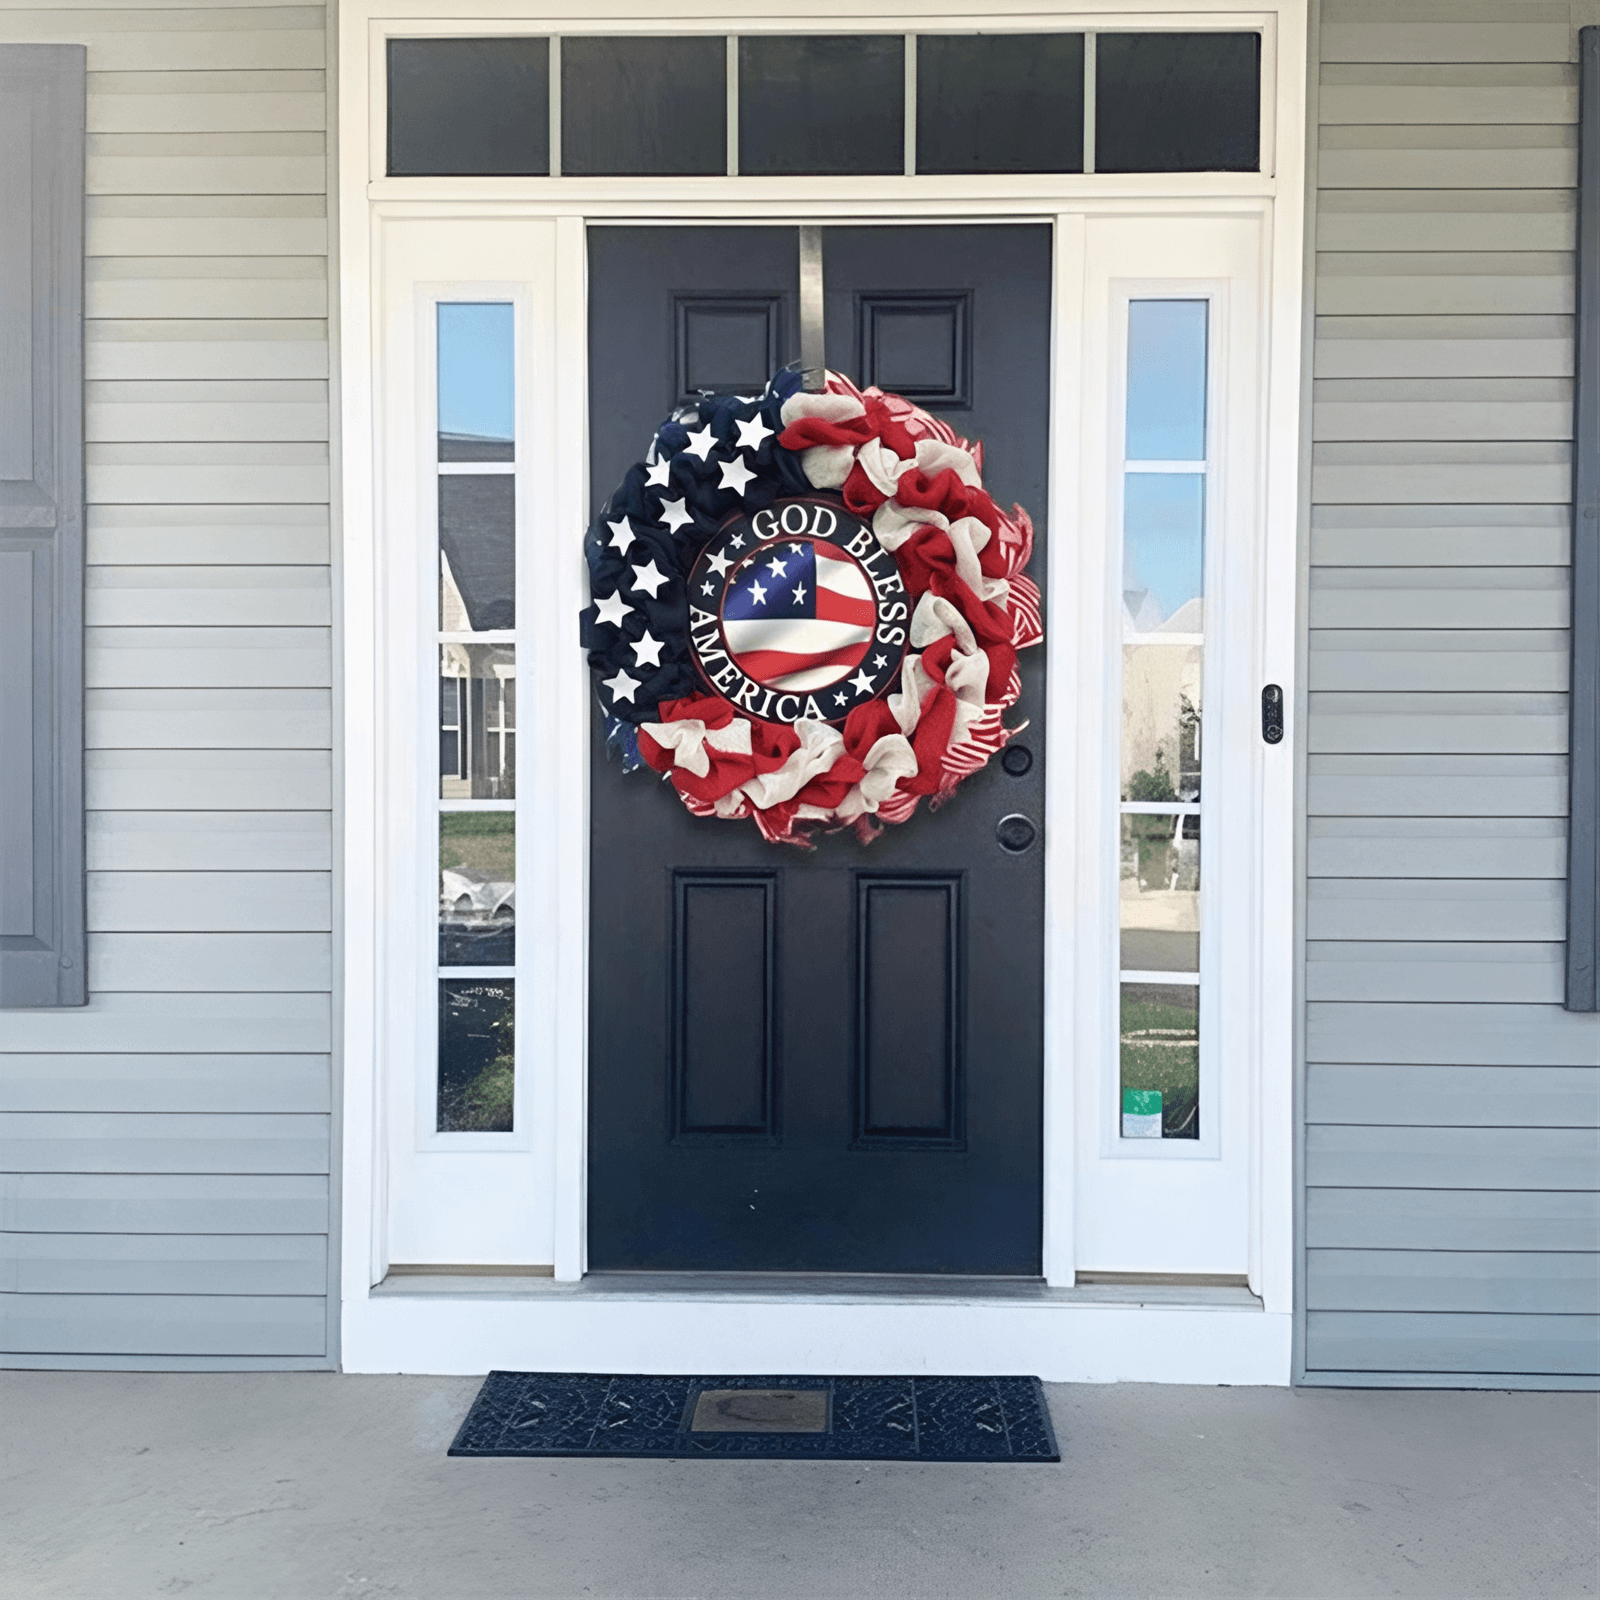 god bless america patriot wreath